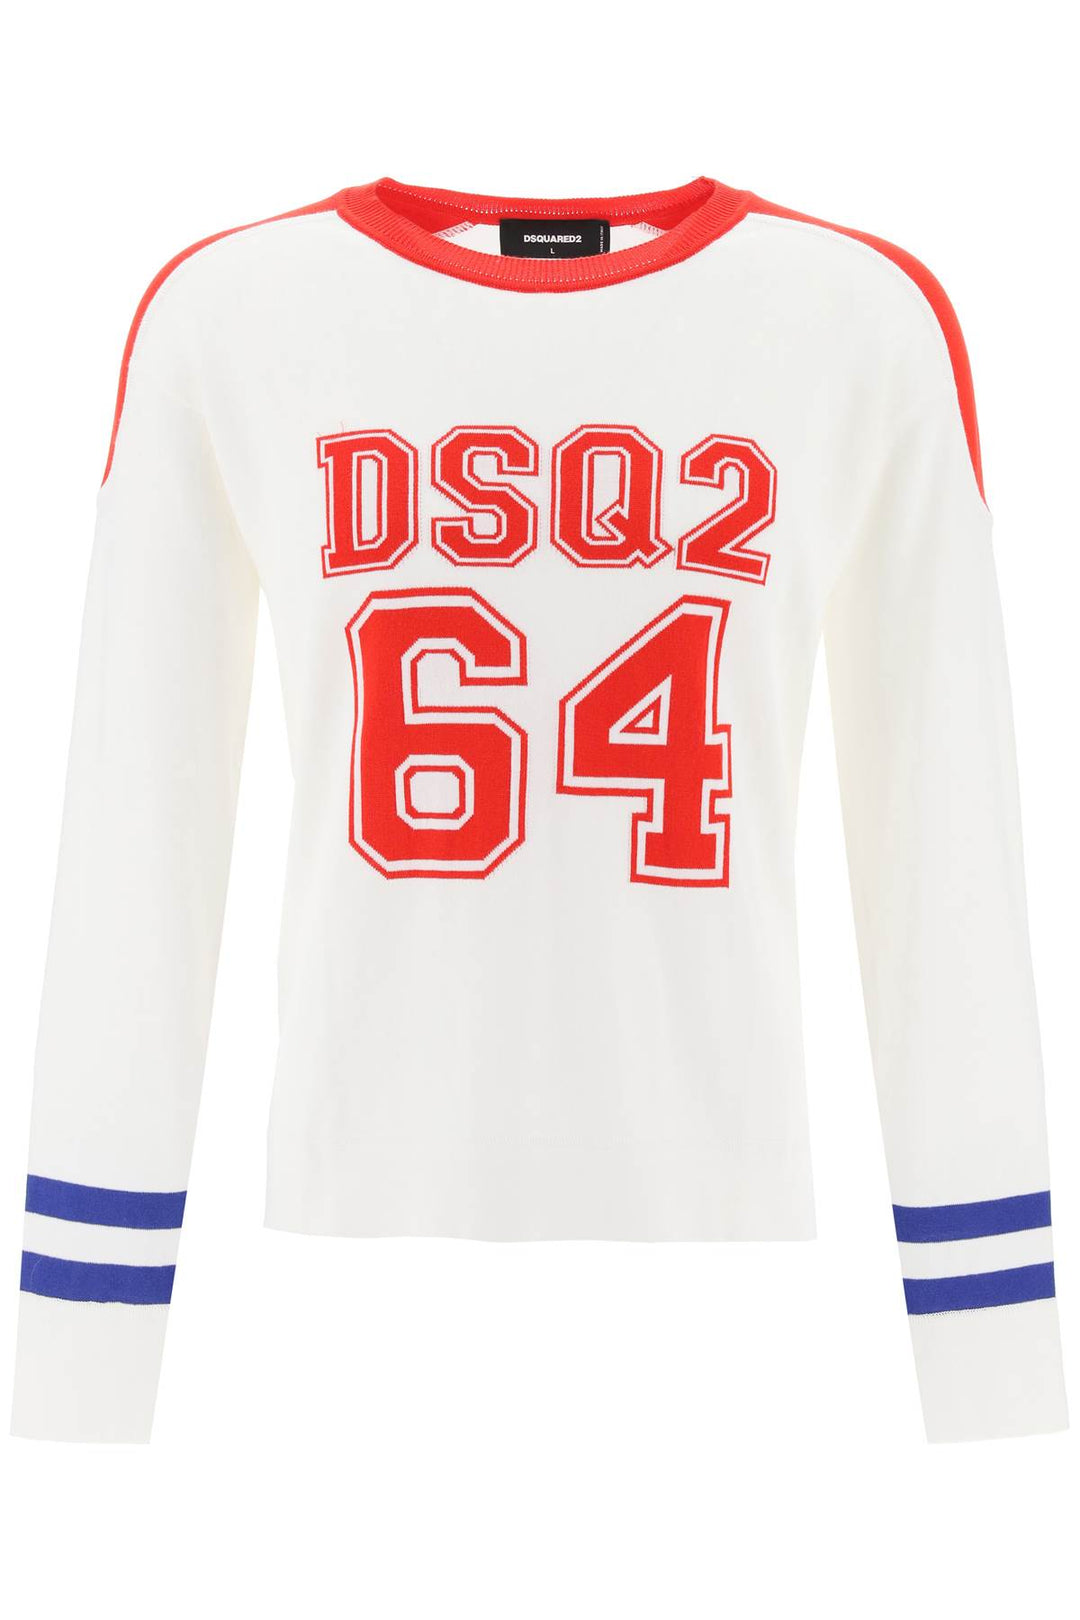 Dsquared2 Dsq2 64 Football Sweater   Bianco